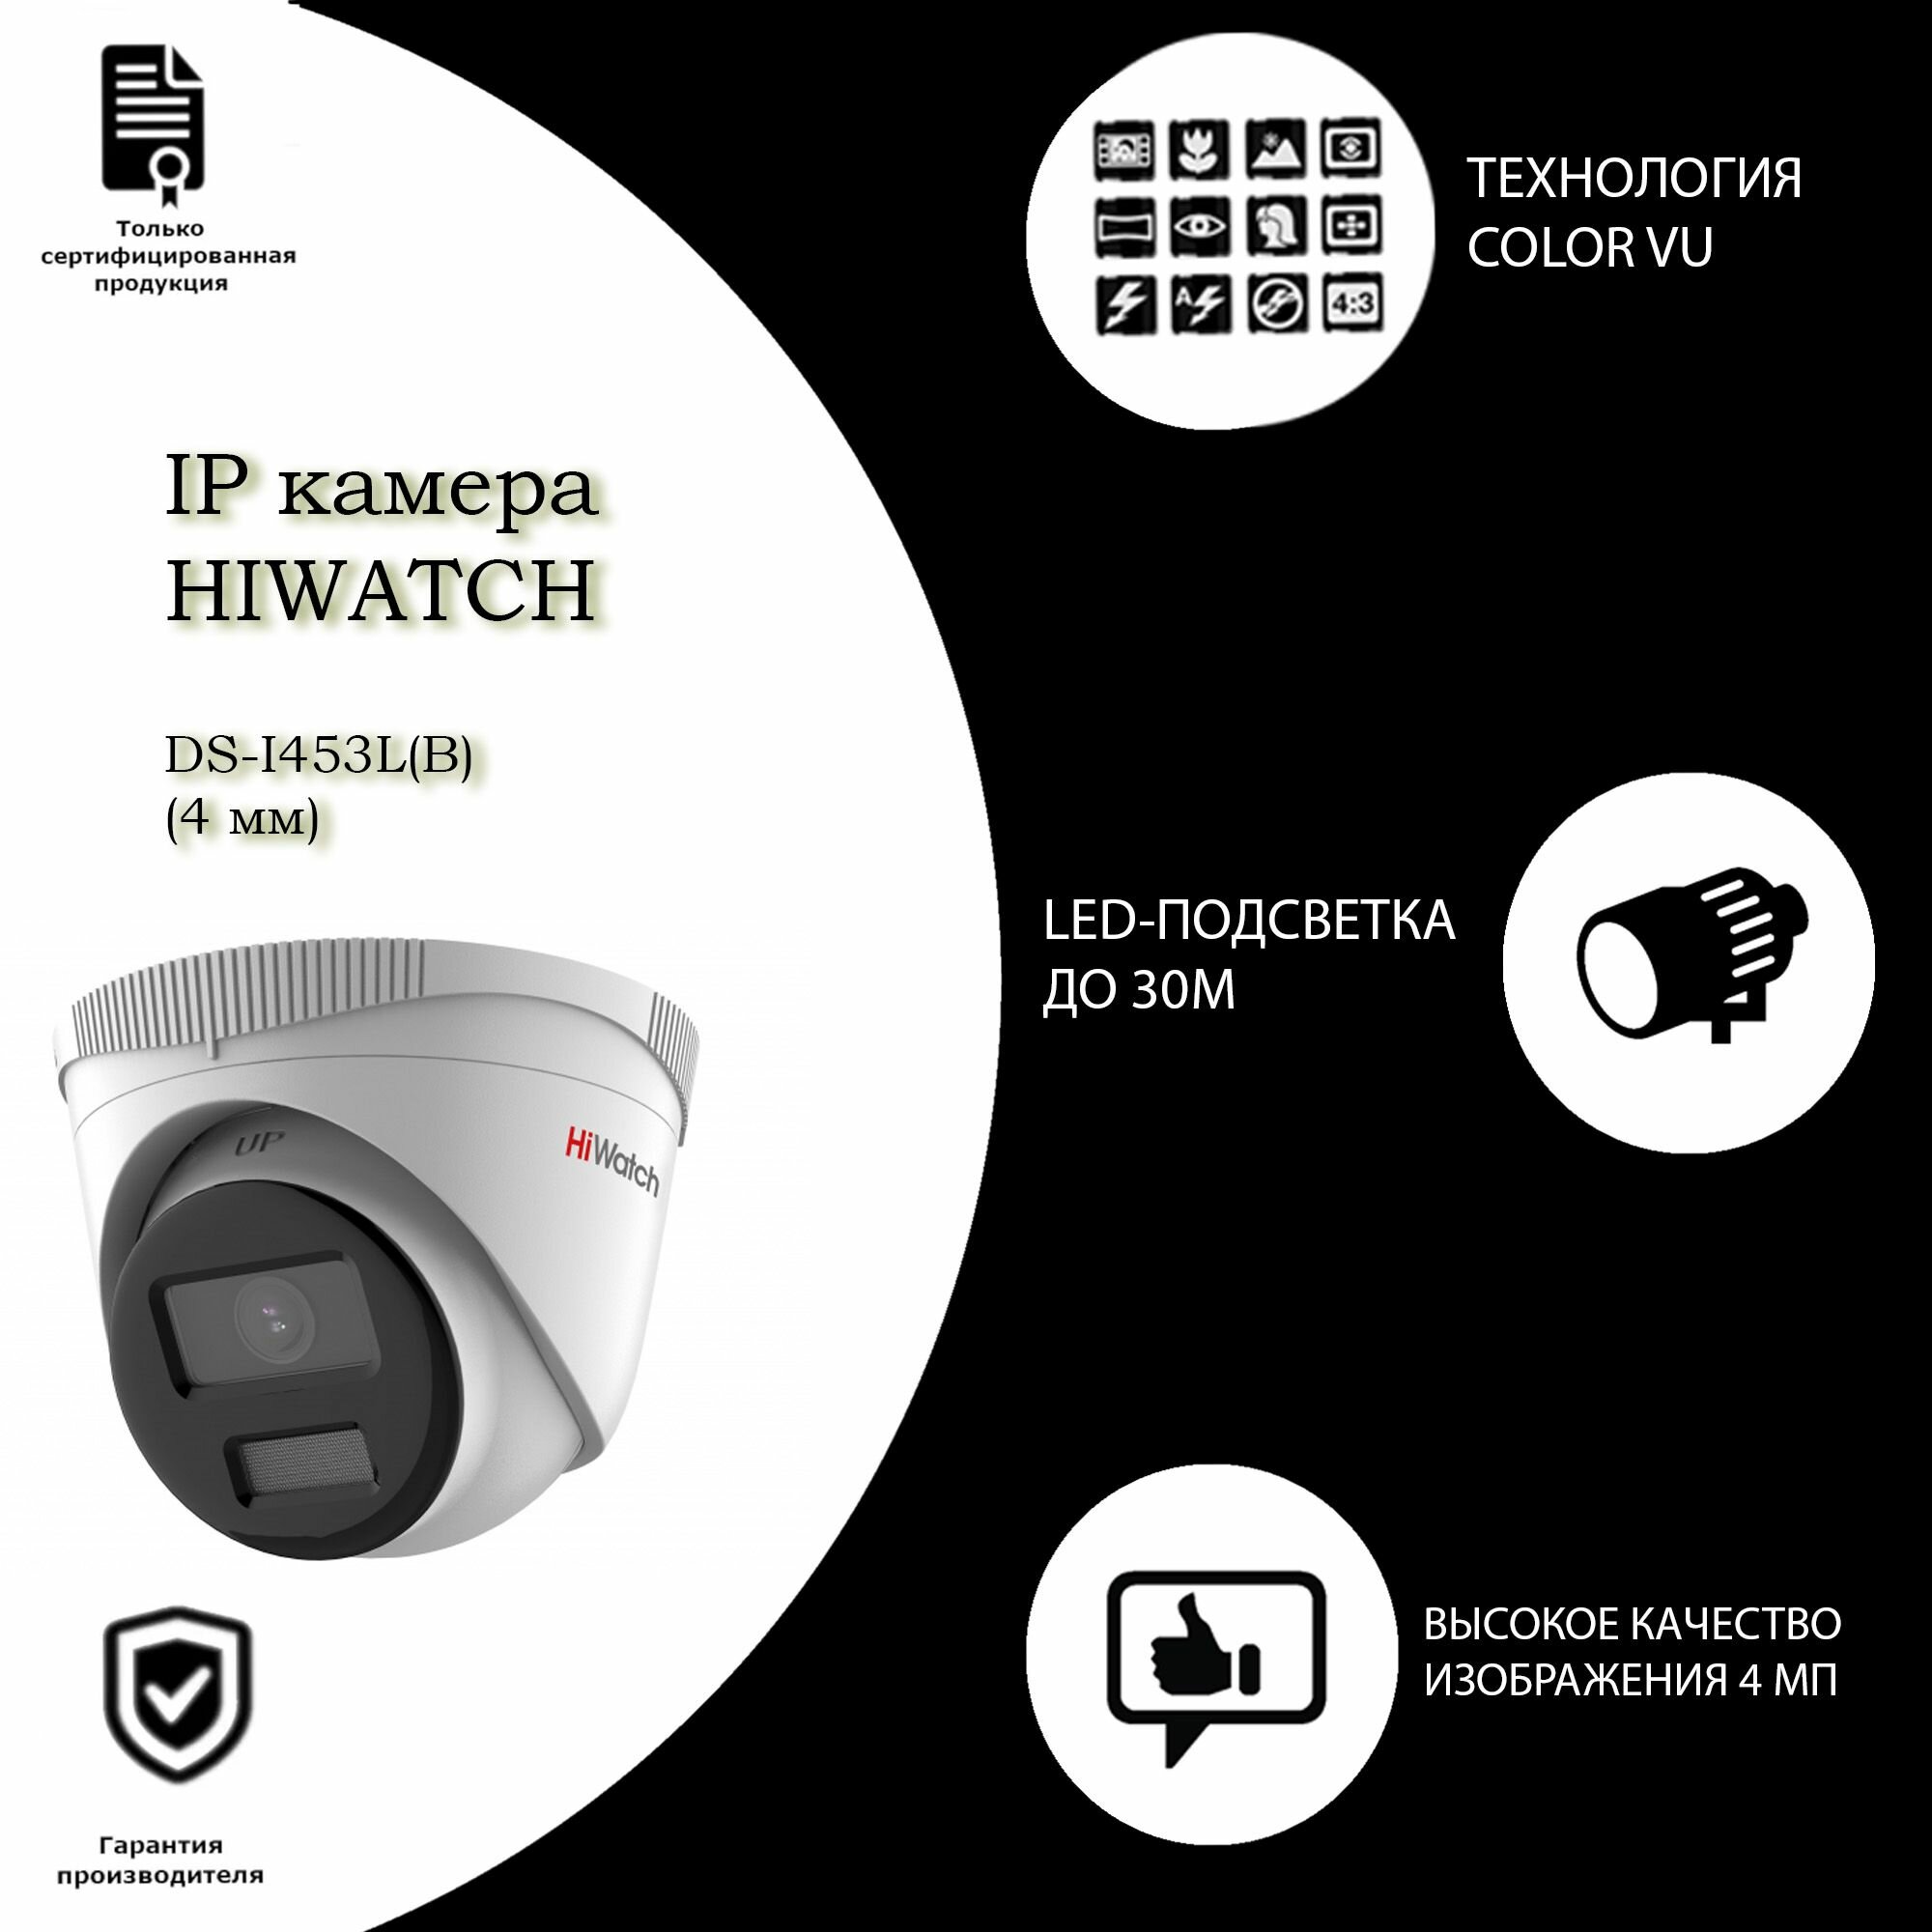 4 Мп купольная IP-камера Hiwatch DS-I453L(B) (4 mm) с технологией ColorVu